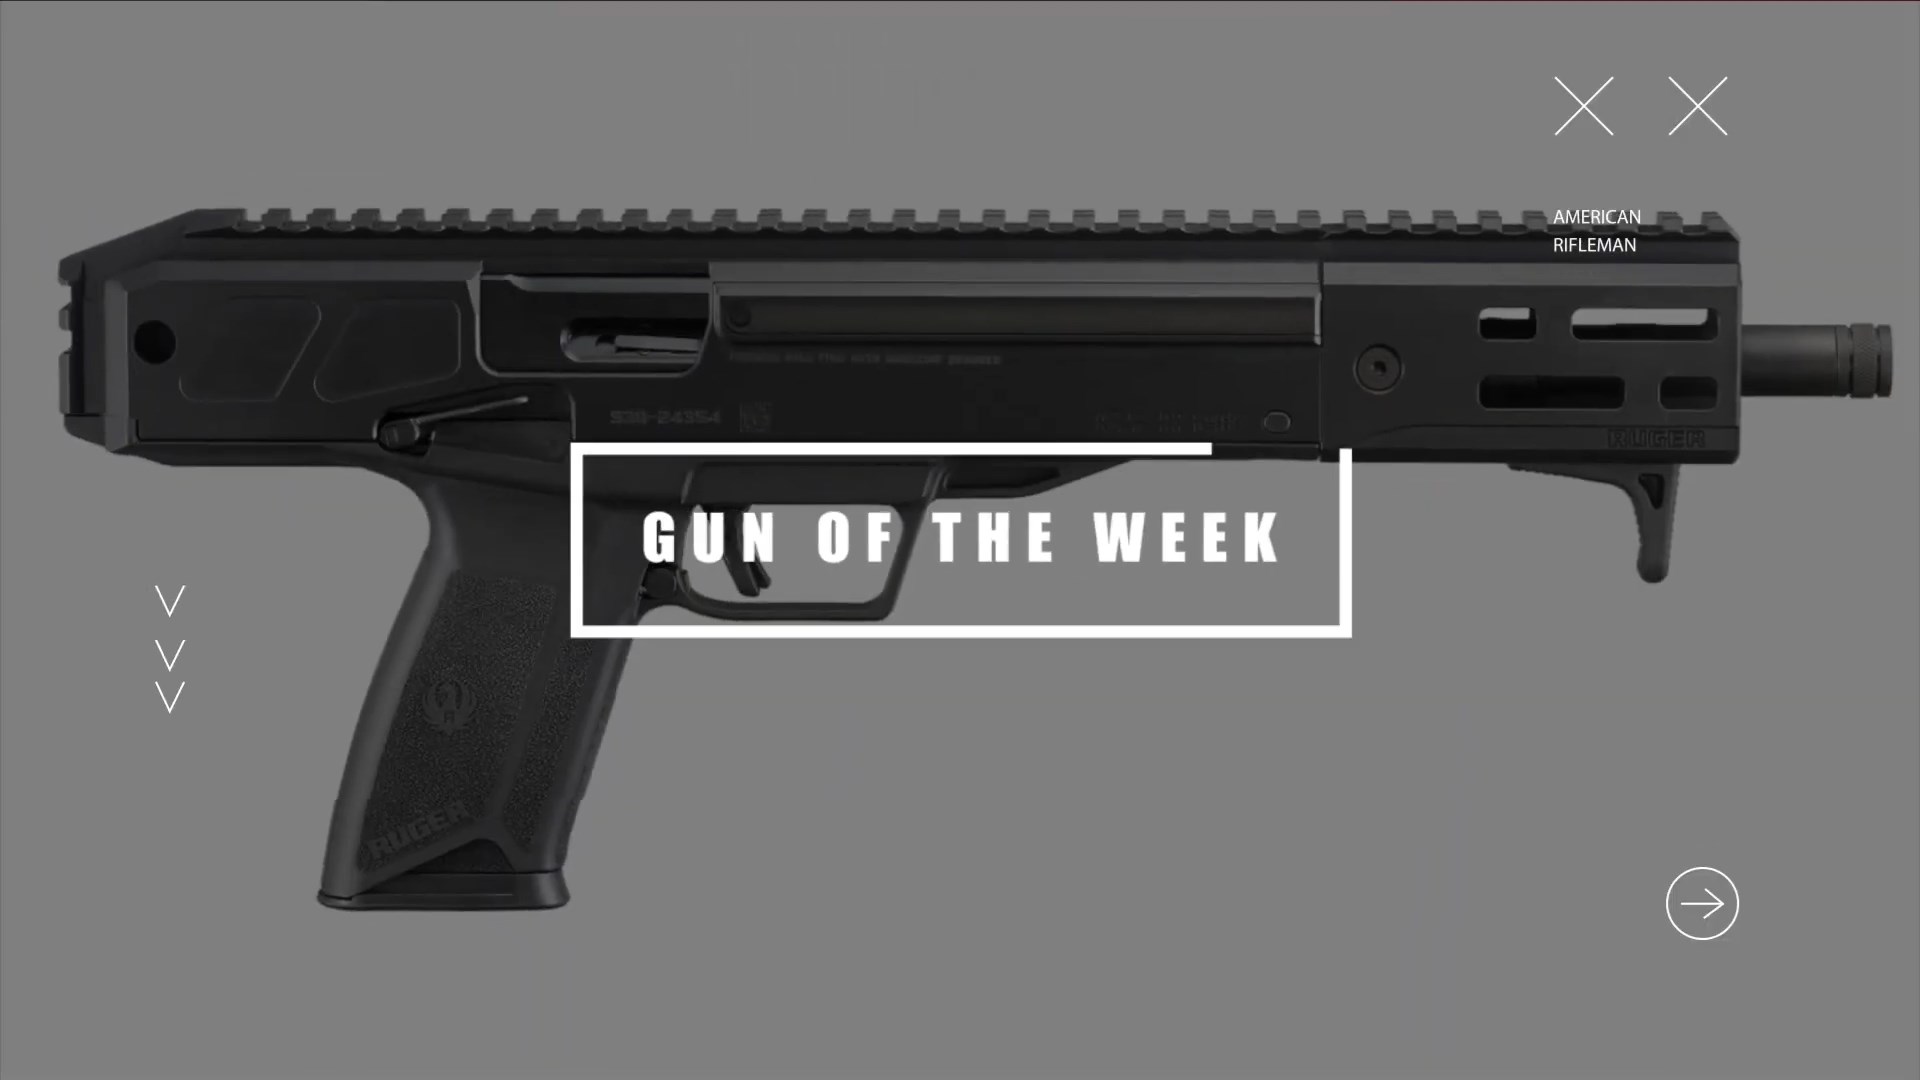 Ruger LC Charger GUN OF THE WEEK title screen text box overlay gun pistol background american rifleman